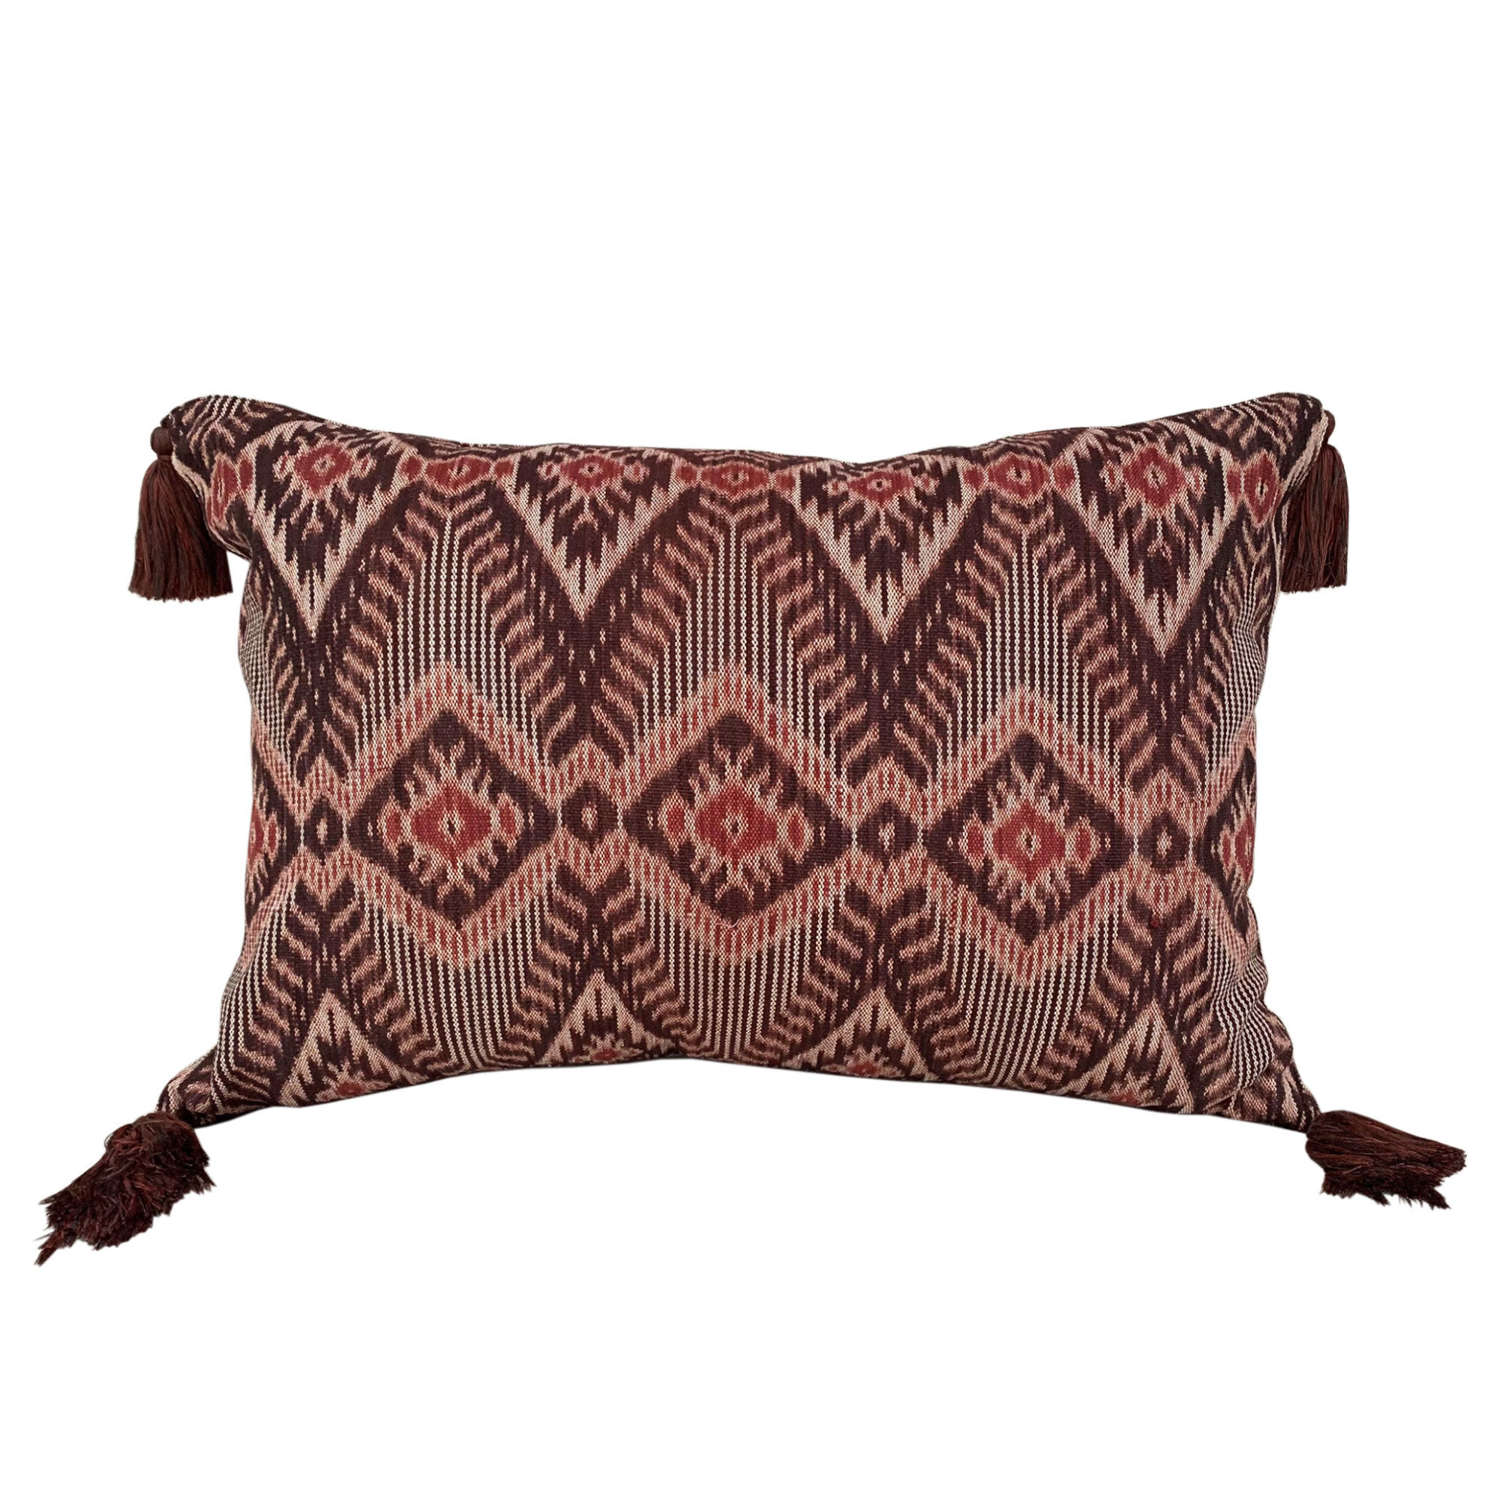 Timor ikat cushions with tassels